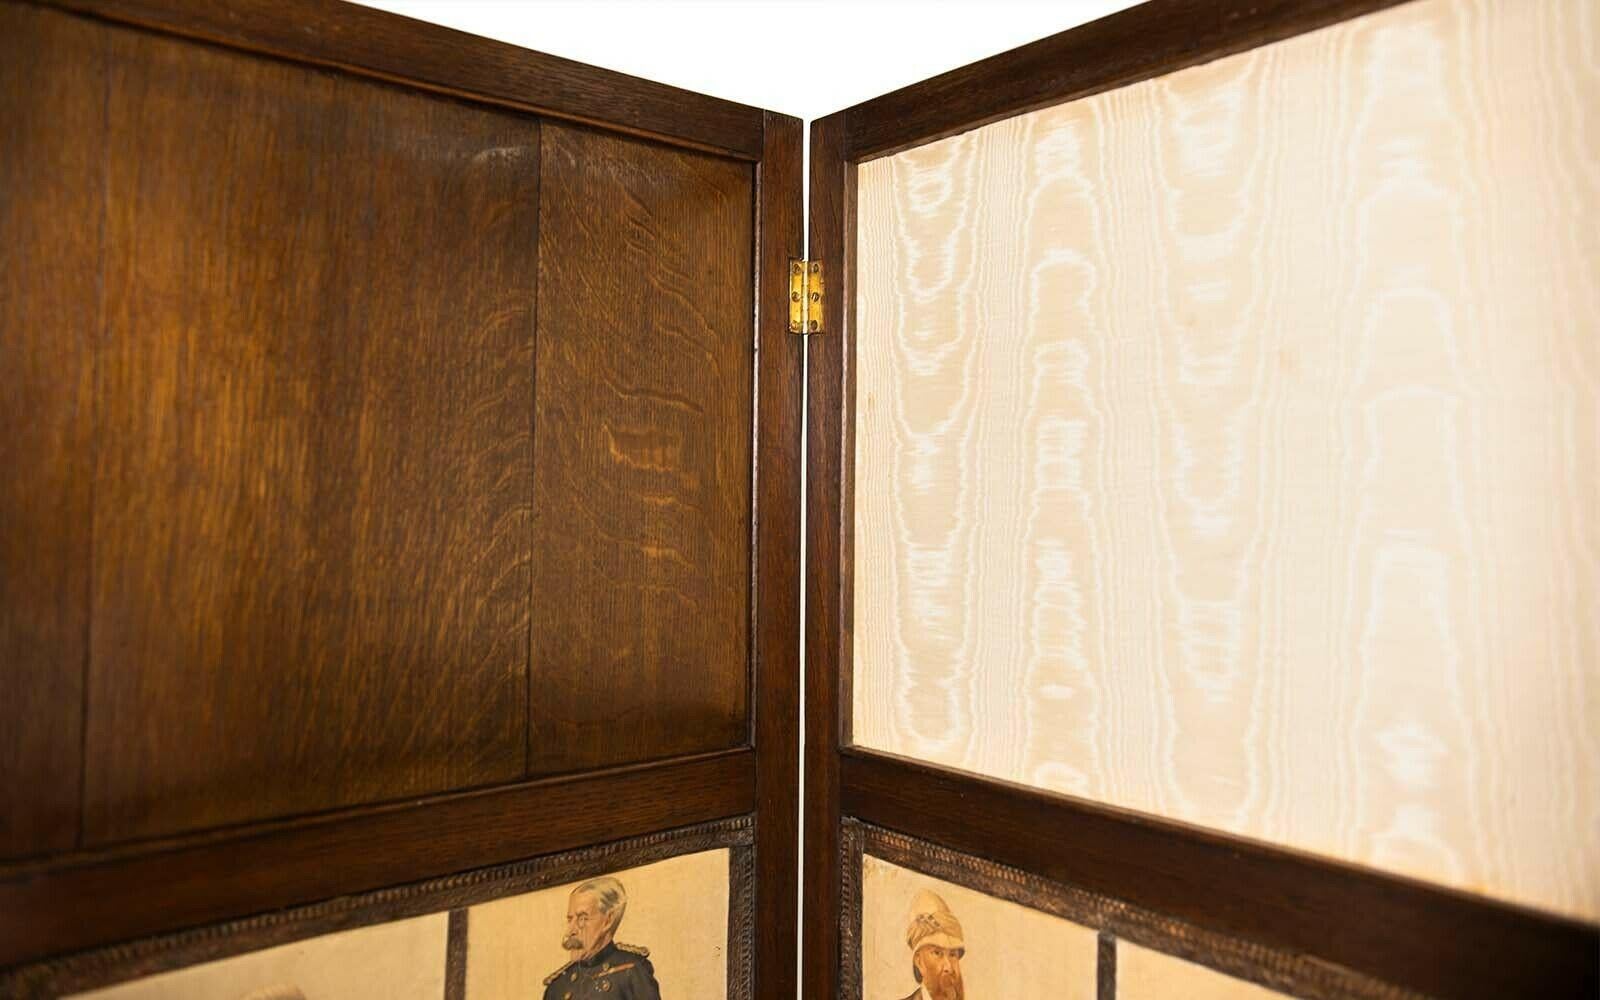 Wood Edwardian Panelled Room Divider Screen Featuring Leslie Matthew Ward “Spy” Print